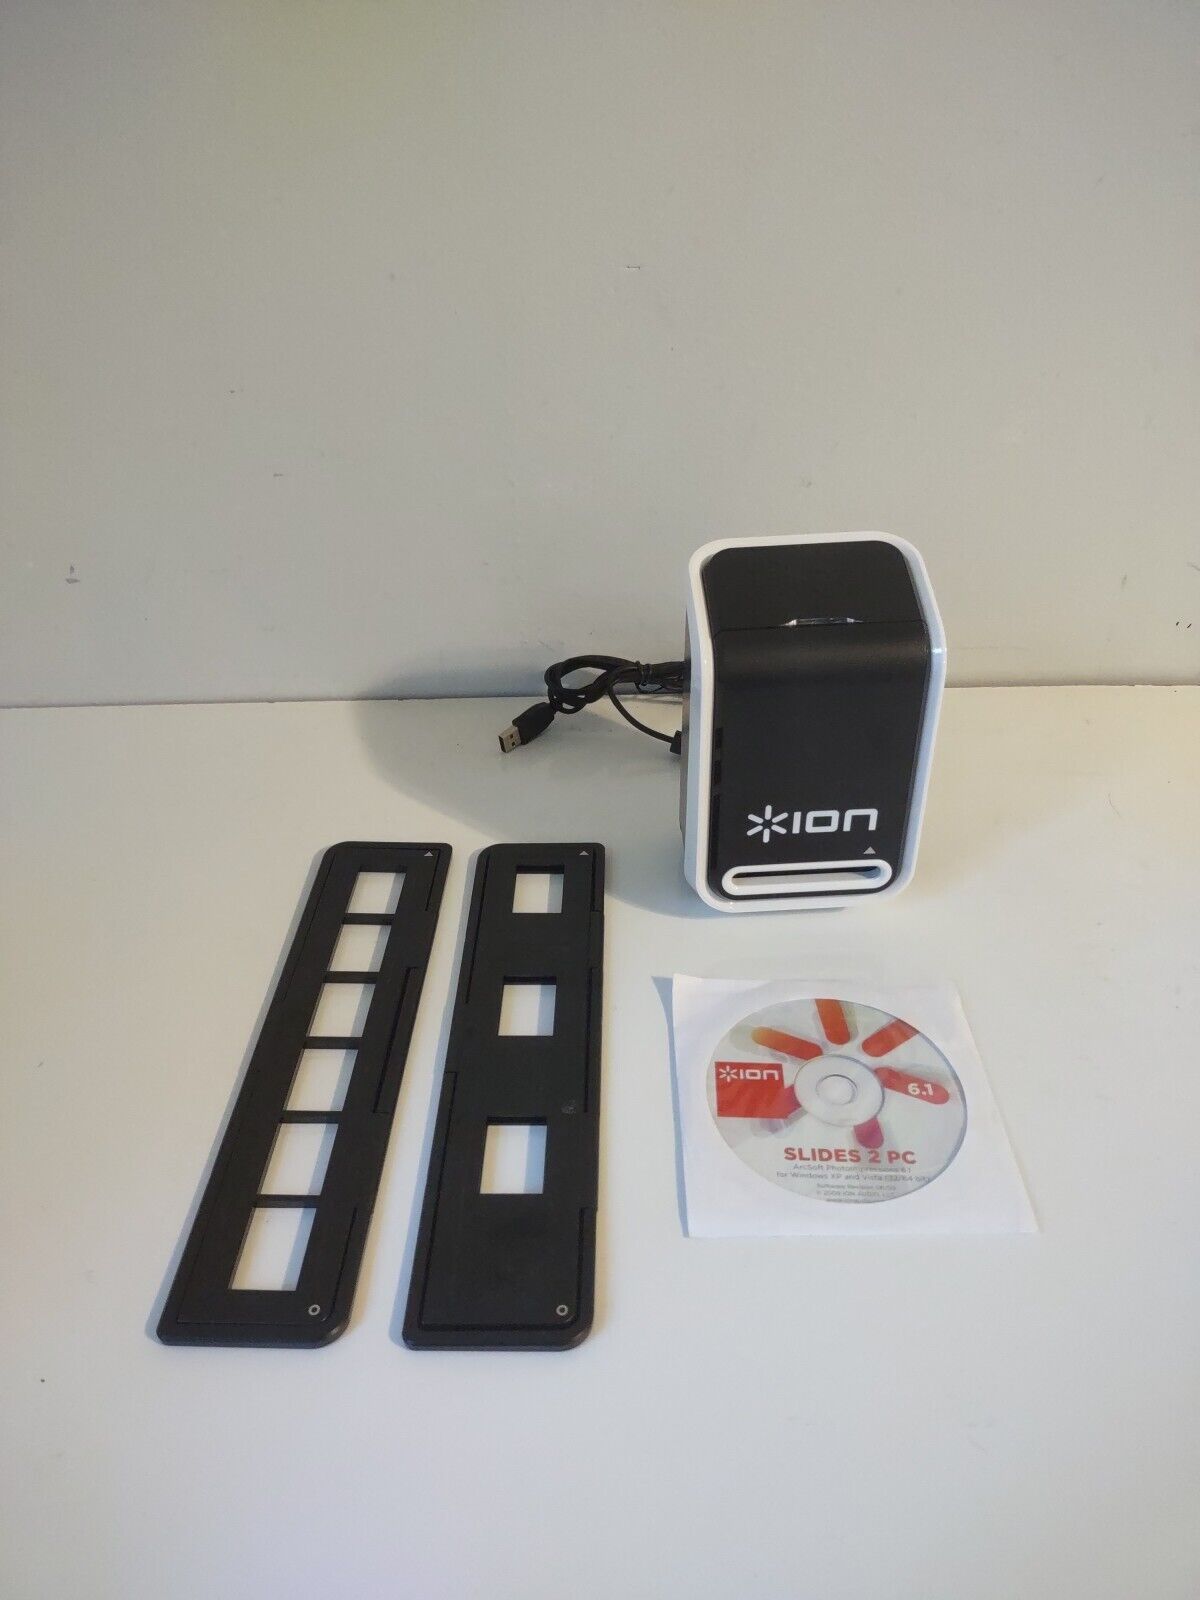 ION Slides 2 PC Film & Slide Scanner  w/ partial accessories